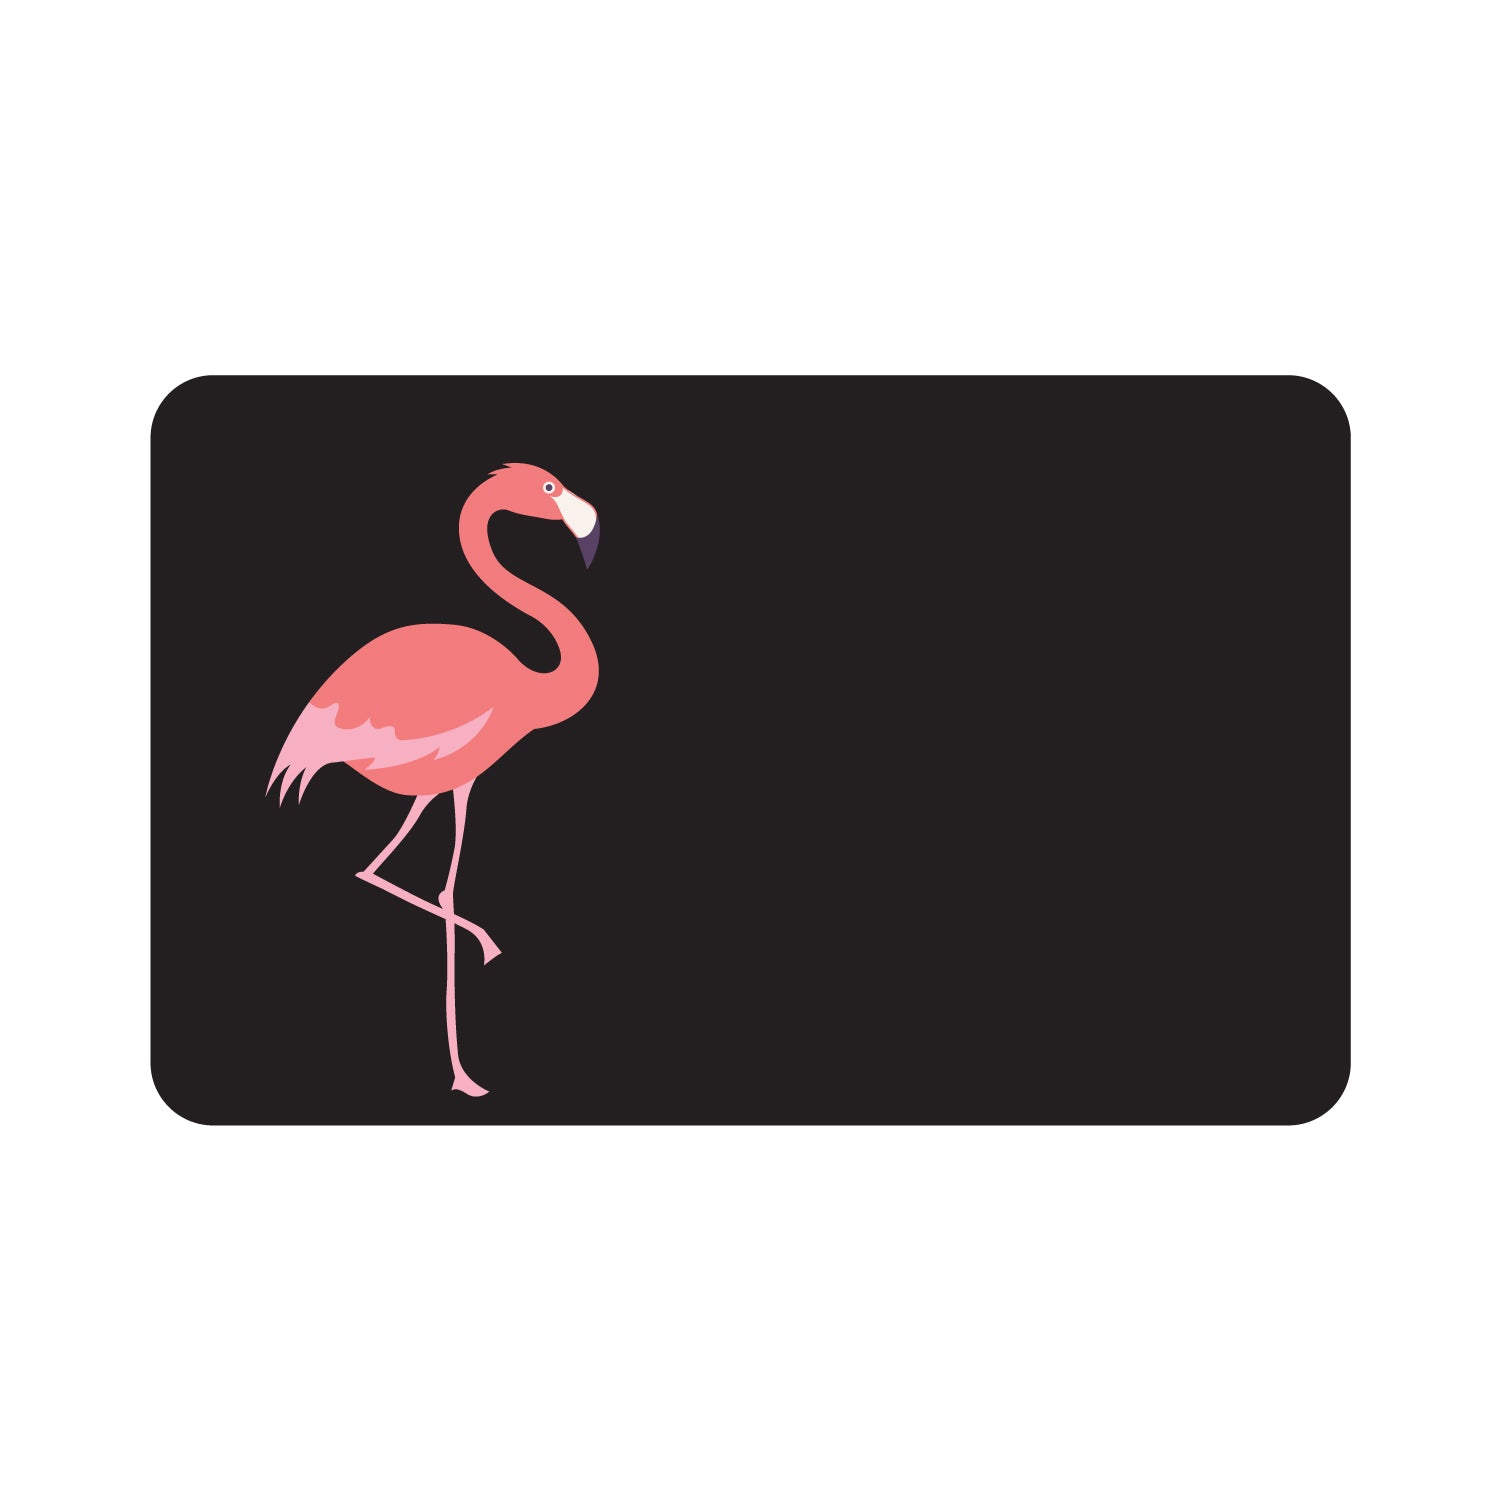 Prints Series Mouse Pad, Flamingo Pink